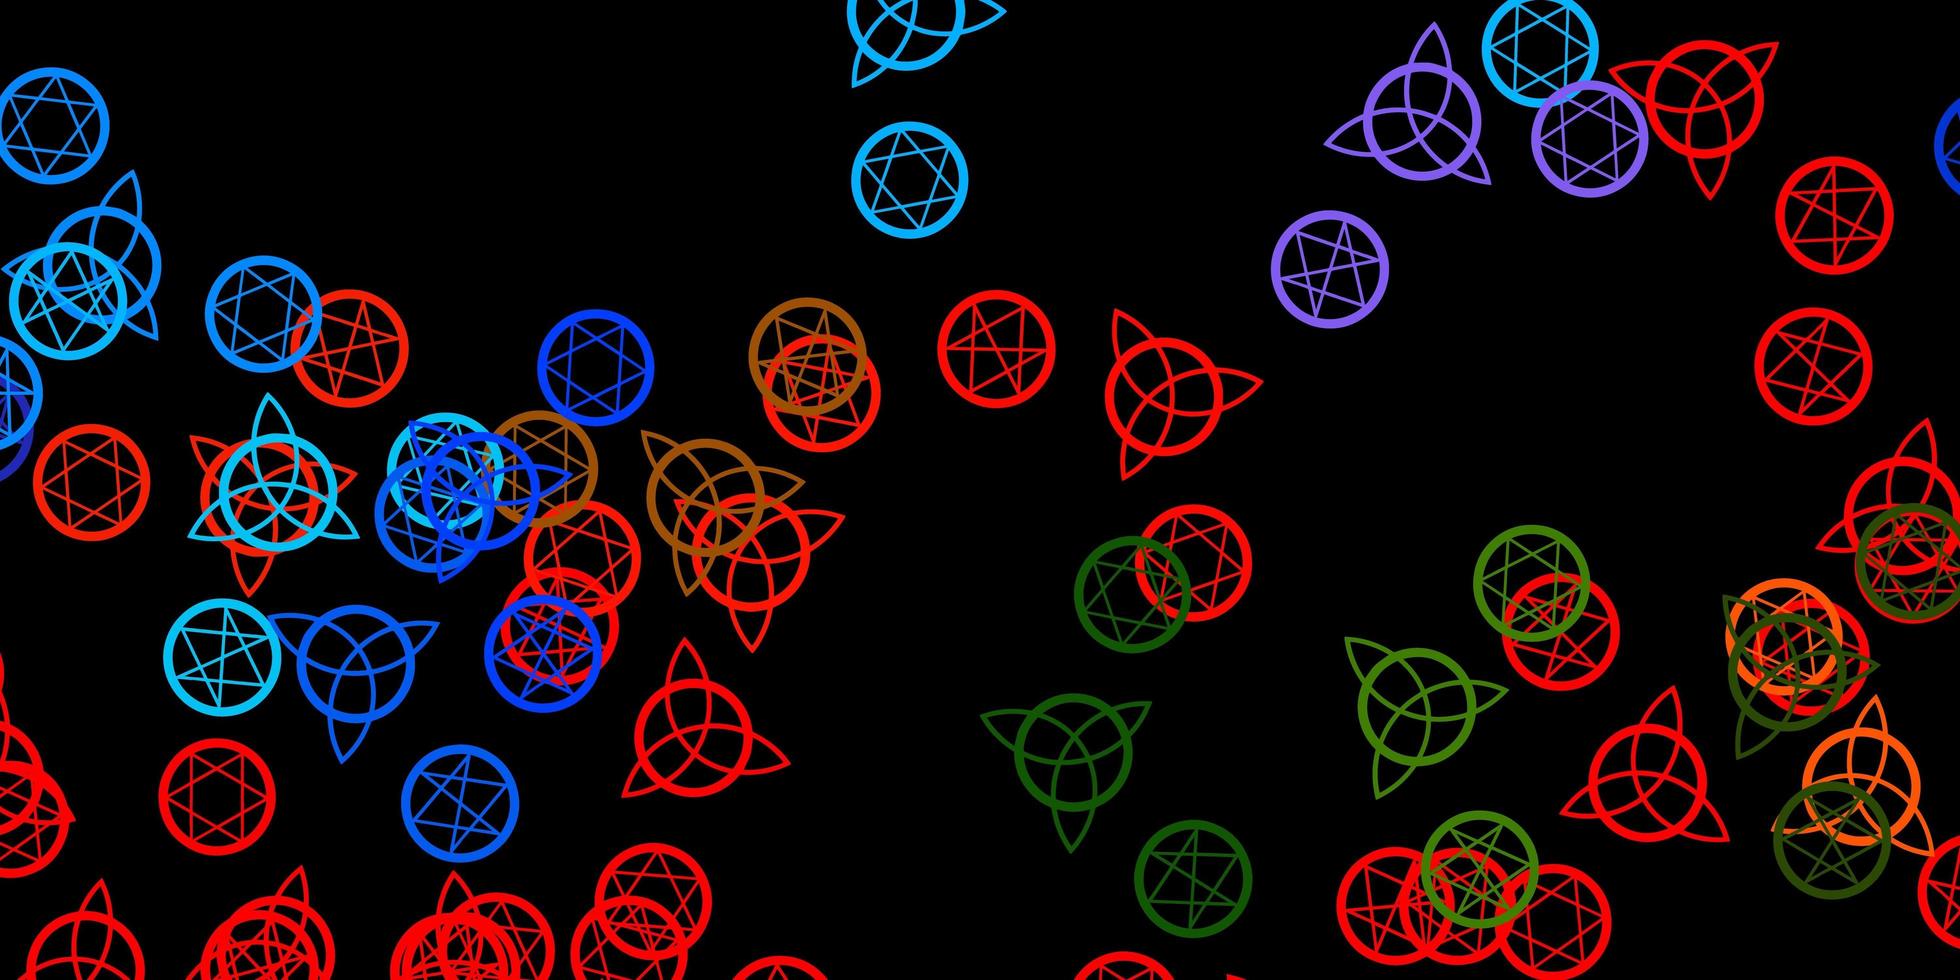 Dark Multicolor vector background with occult symbols.